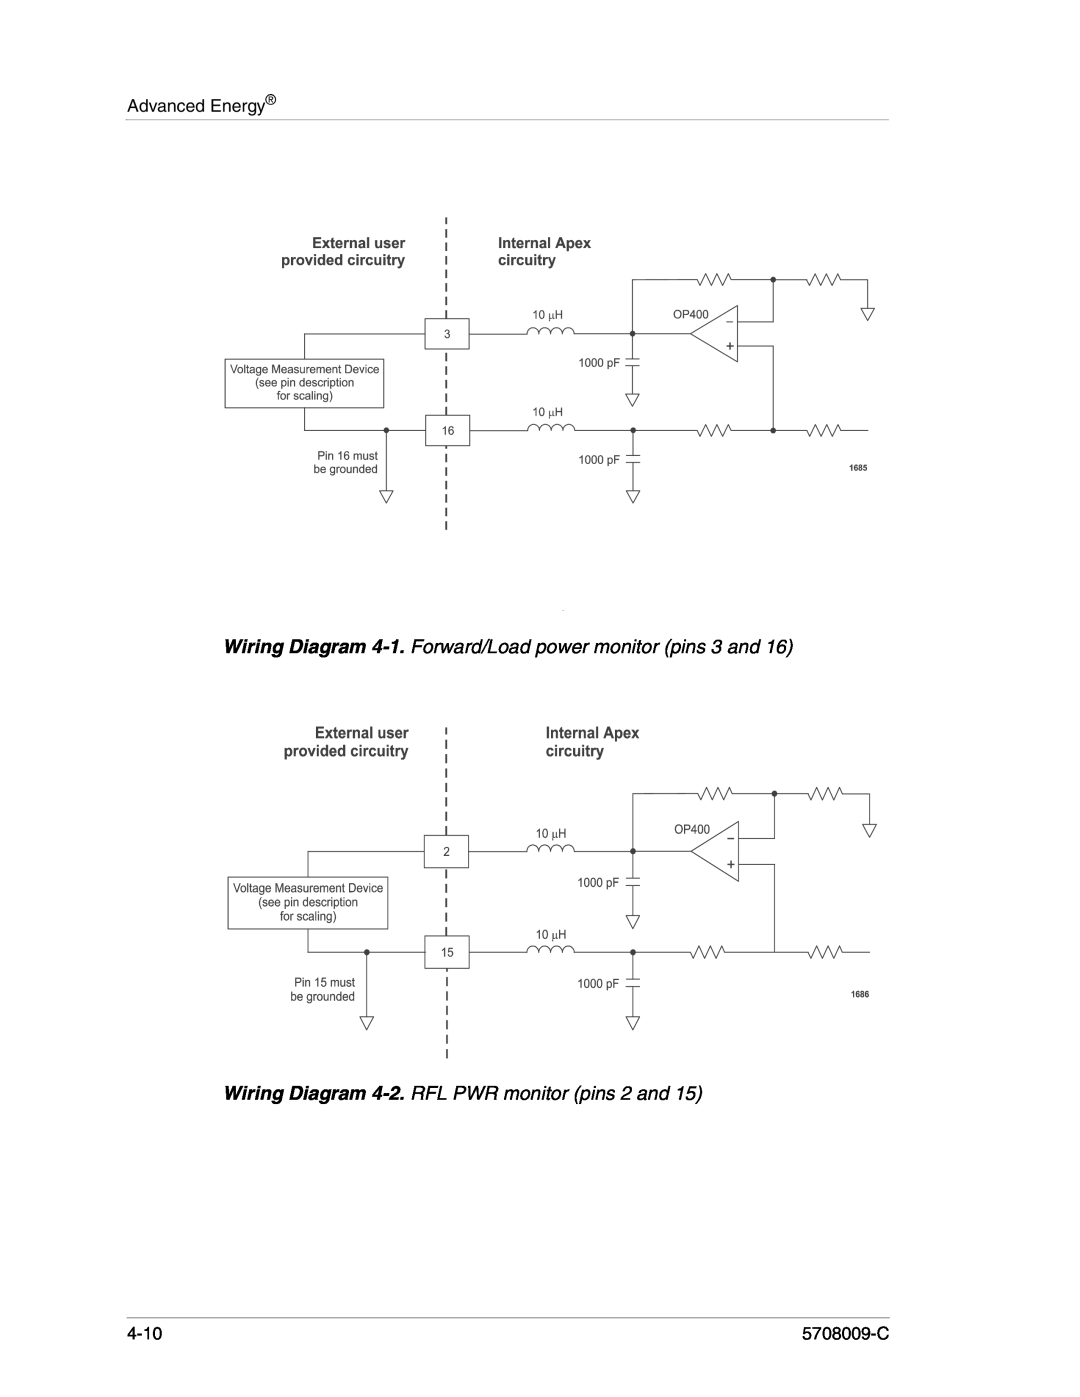 Apex Digital 5708009-C manual Wiring Diagram 4-1. Forward/Load power monitor pins 3 and, Advanced Energy, 4-10 